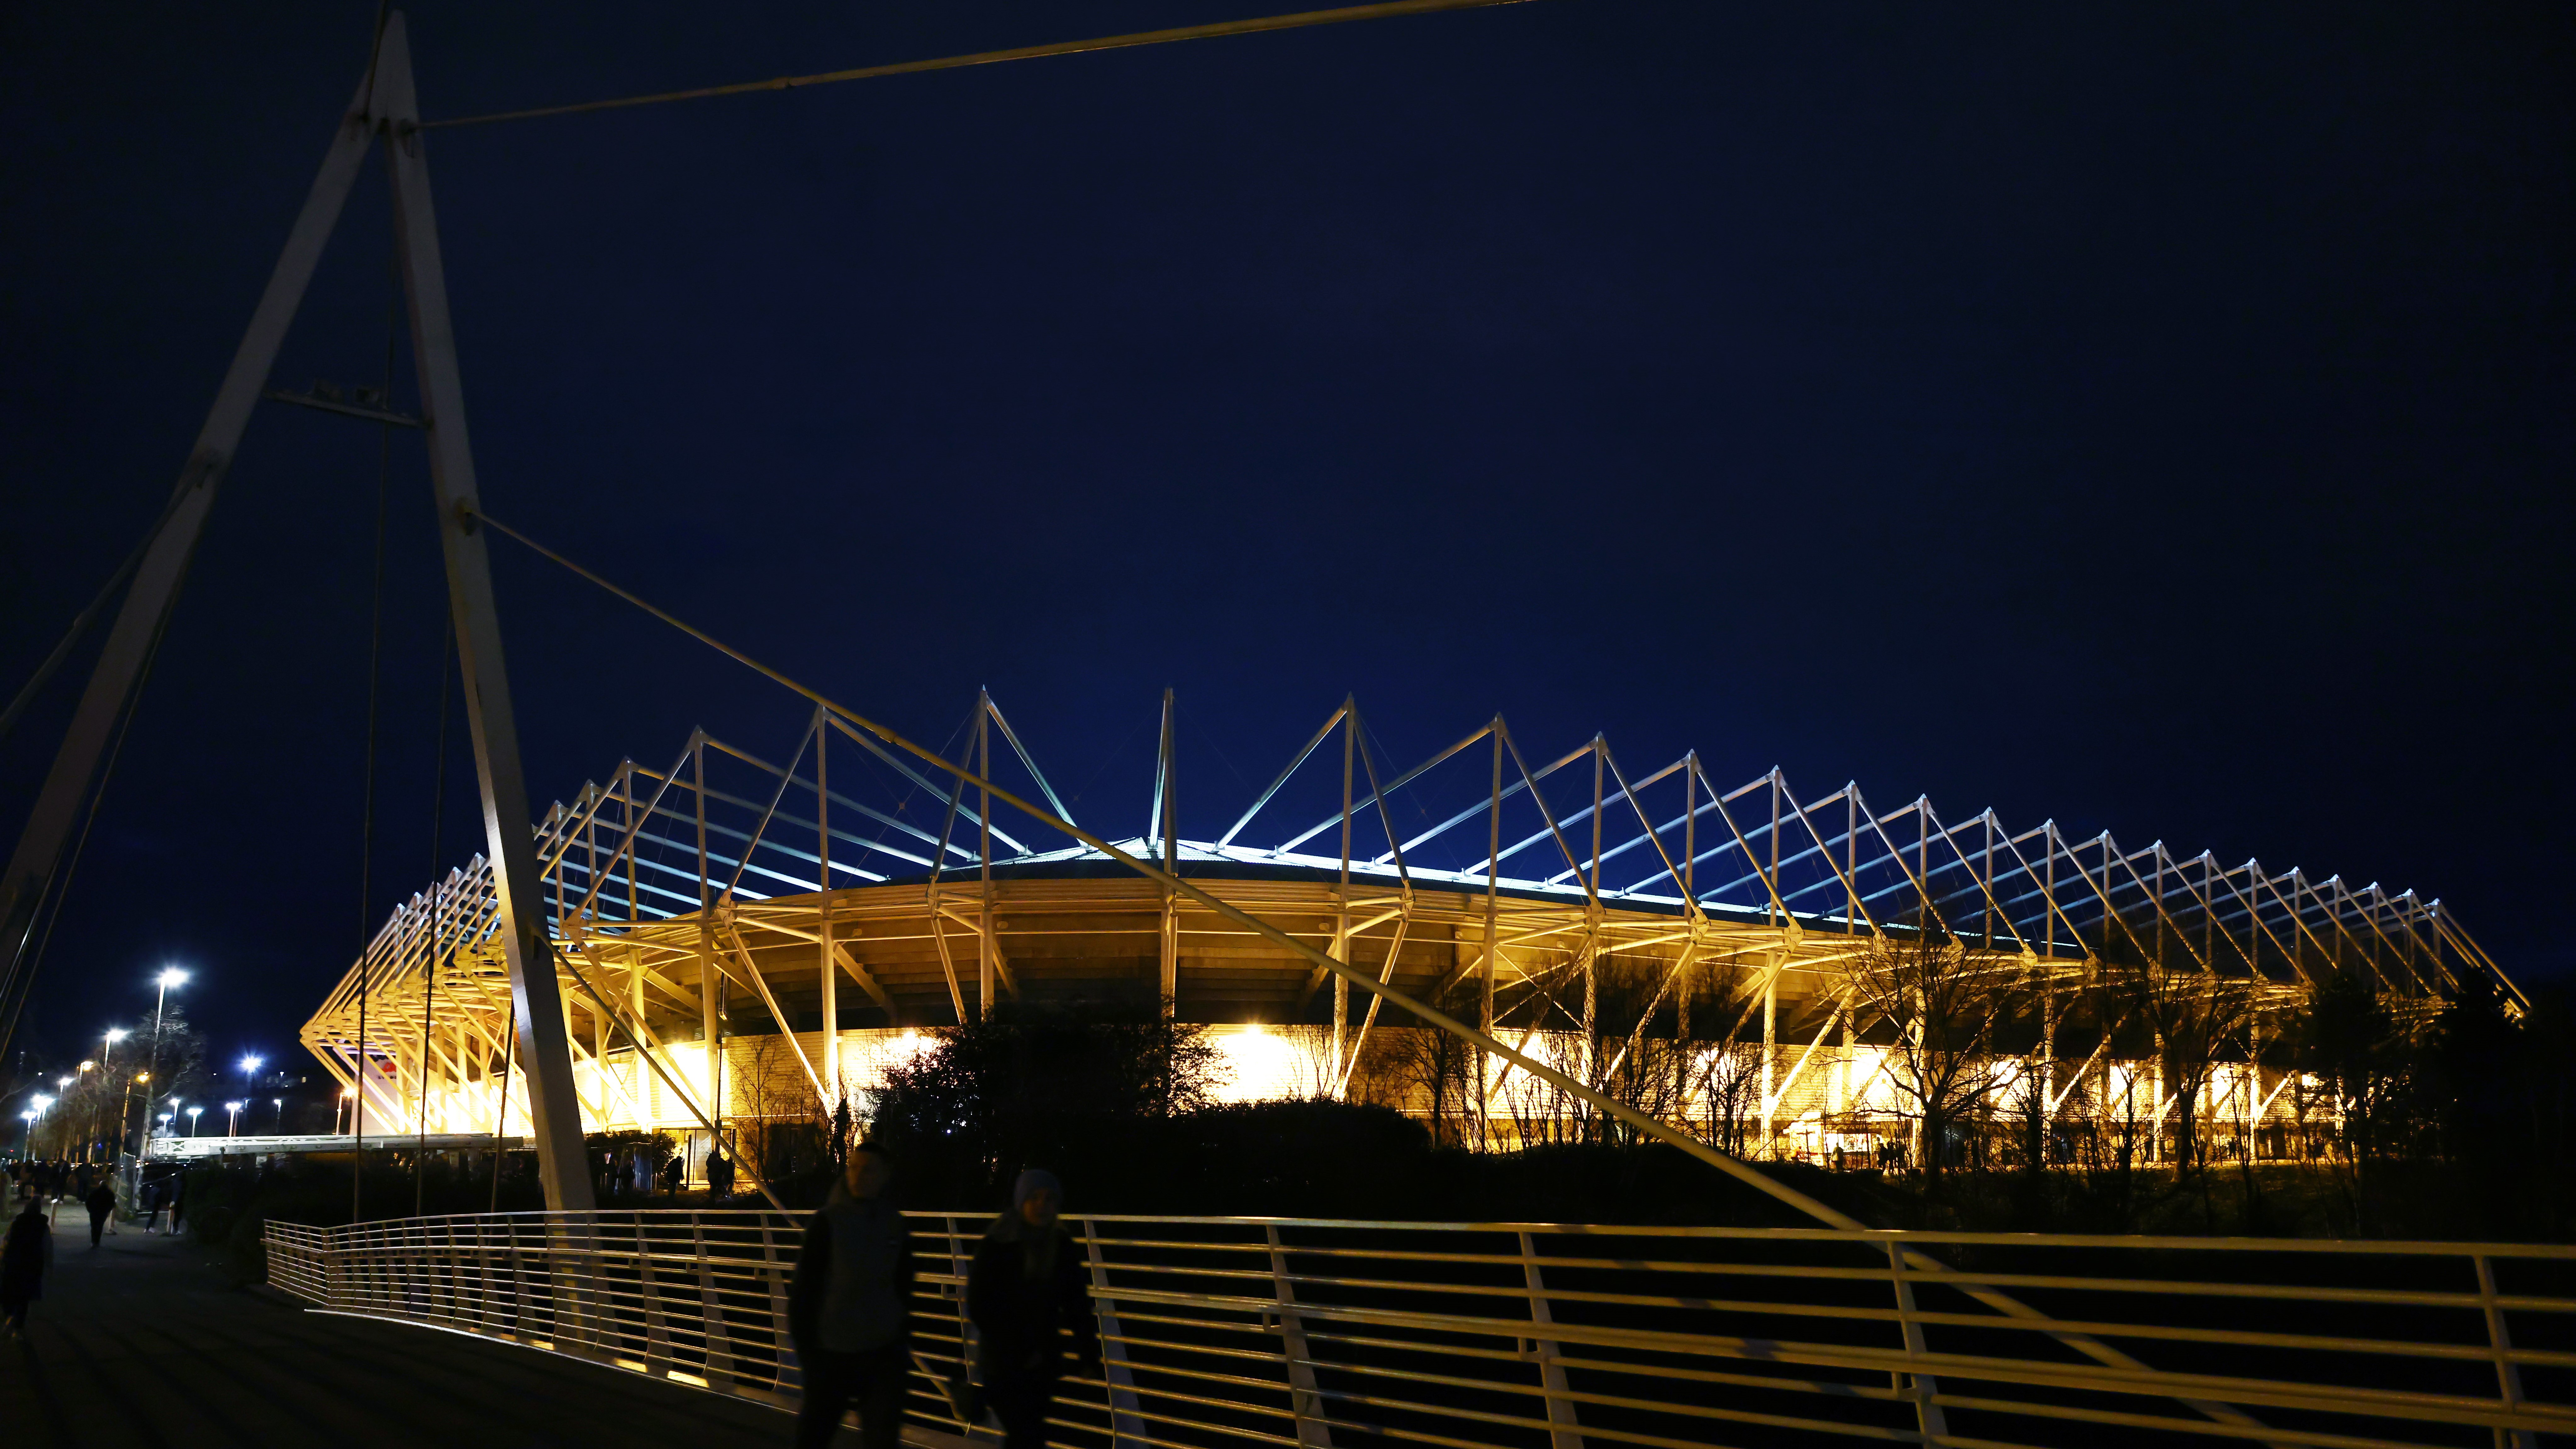 Outside the Swansea.com Stadium at night